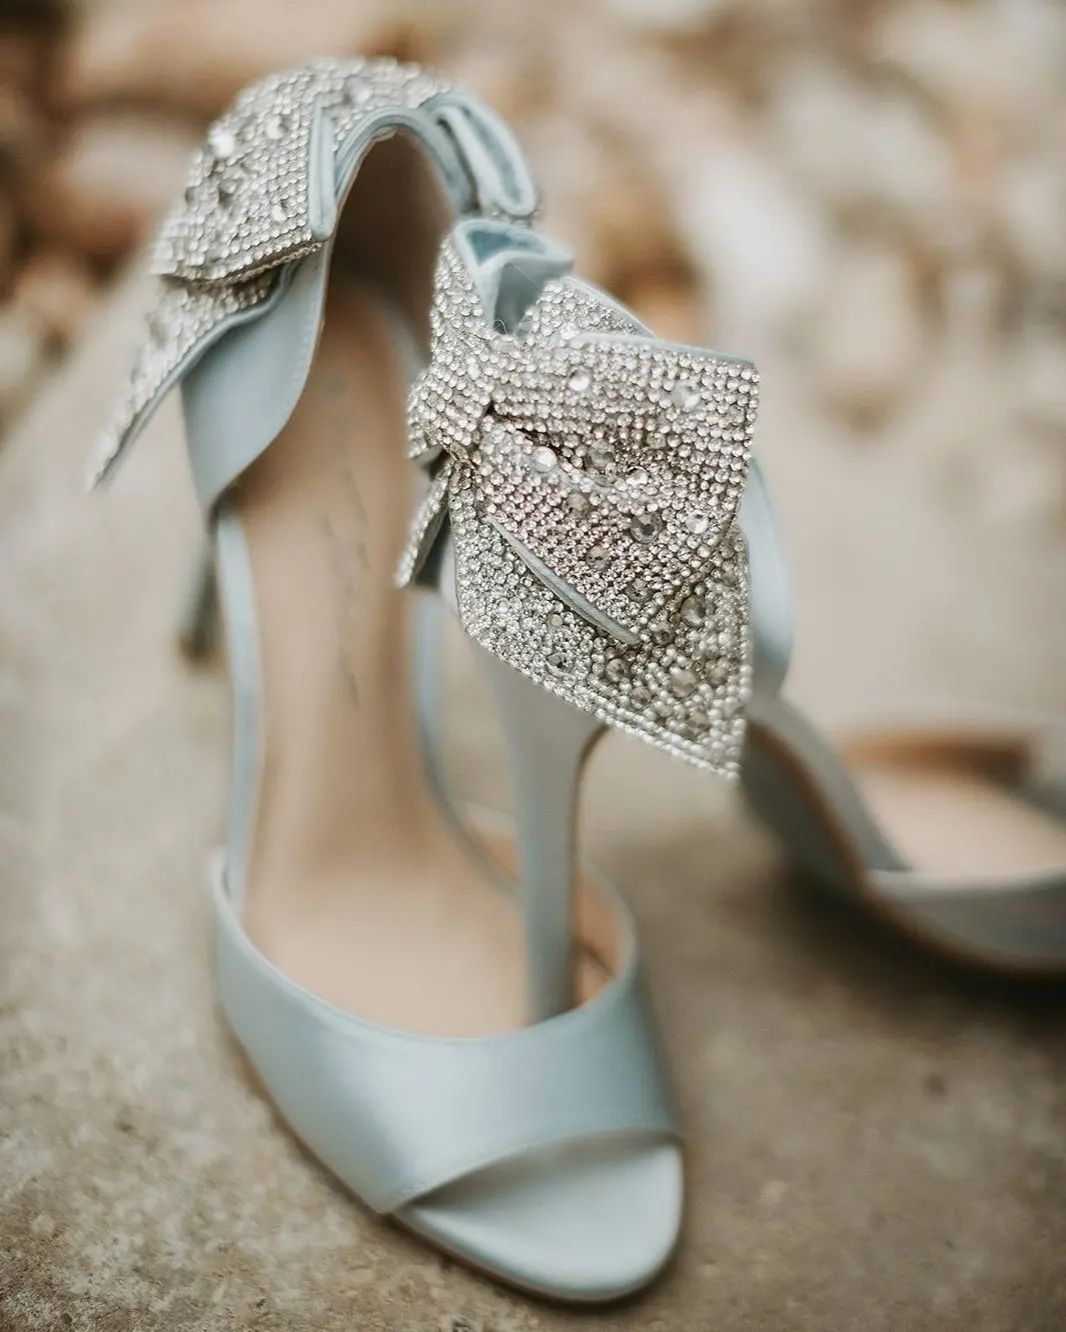 Coś niebieskiego? 💙
.
#weddingshoes from @davidsbridal 
.
.
.
.
.
.
#butyslubne #sukniaslubna #pannamloda #dodatkislubne #wesele #slub #bride #bridal #butyslubne #akcesoriaslubne